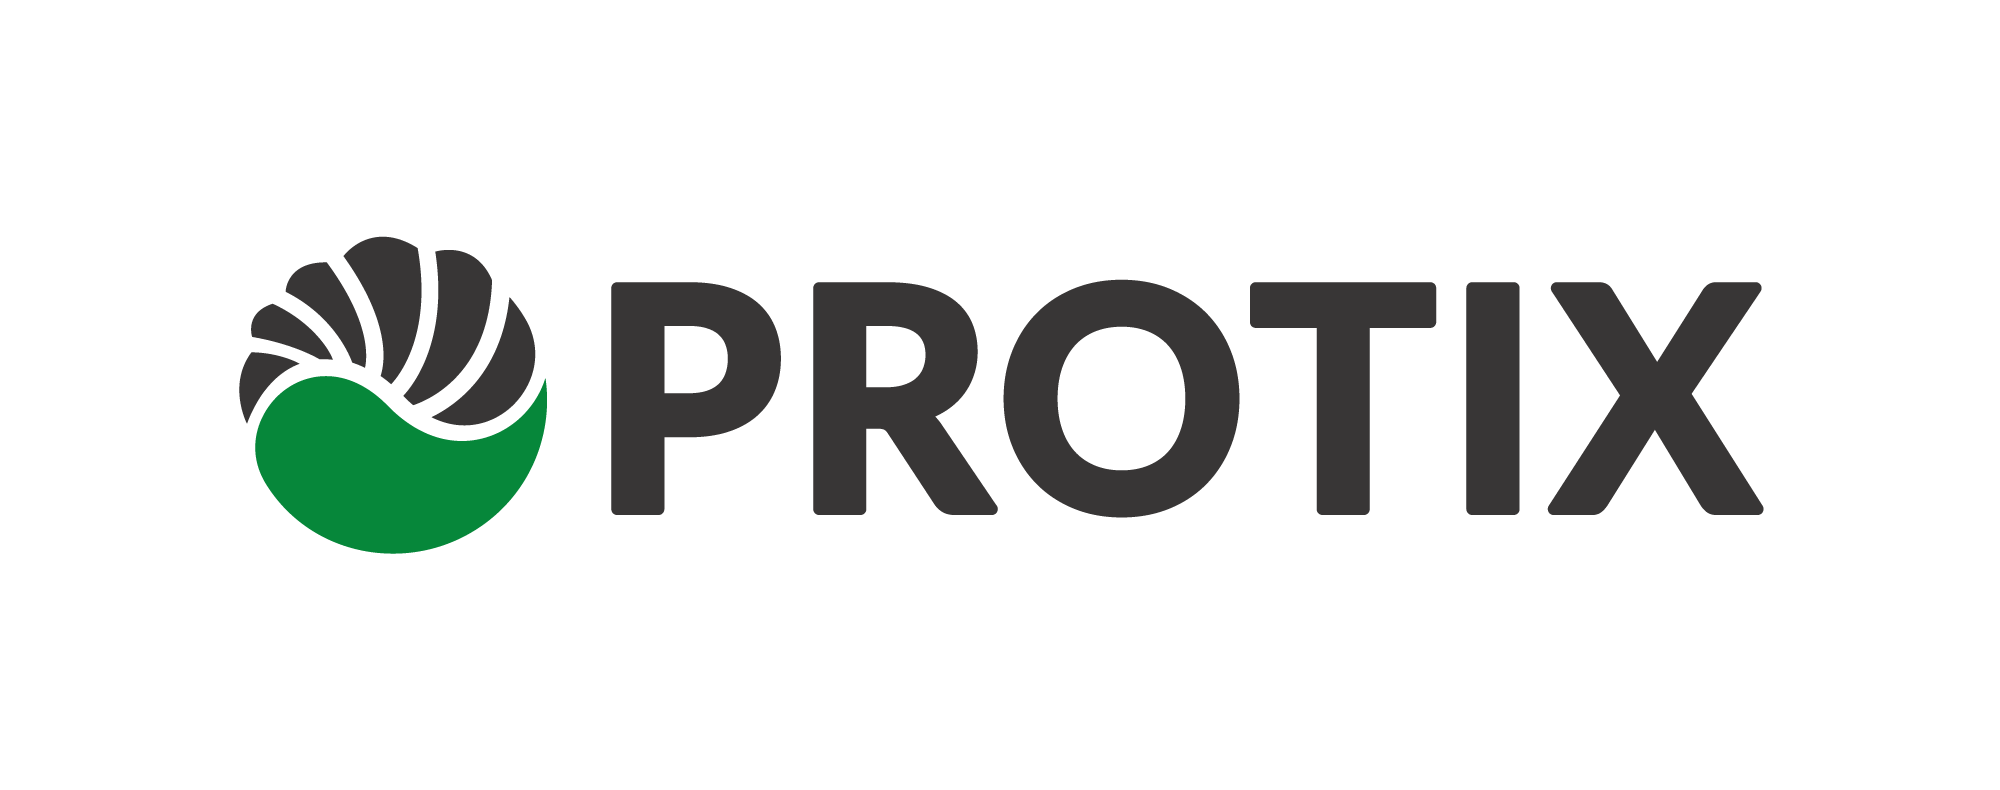 Protix_logo_RGB